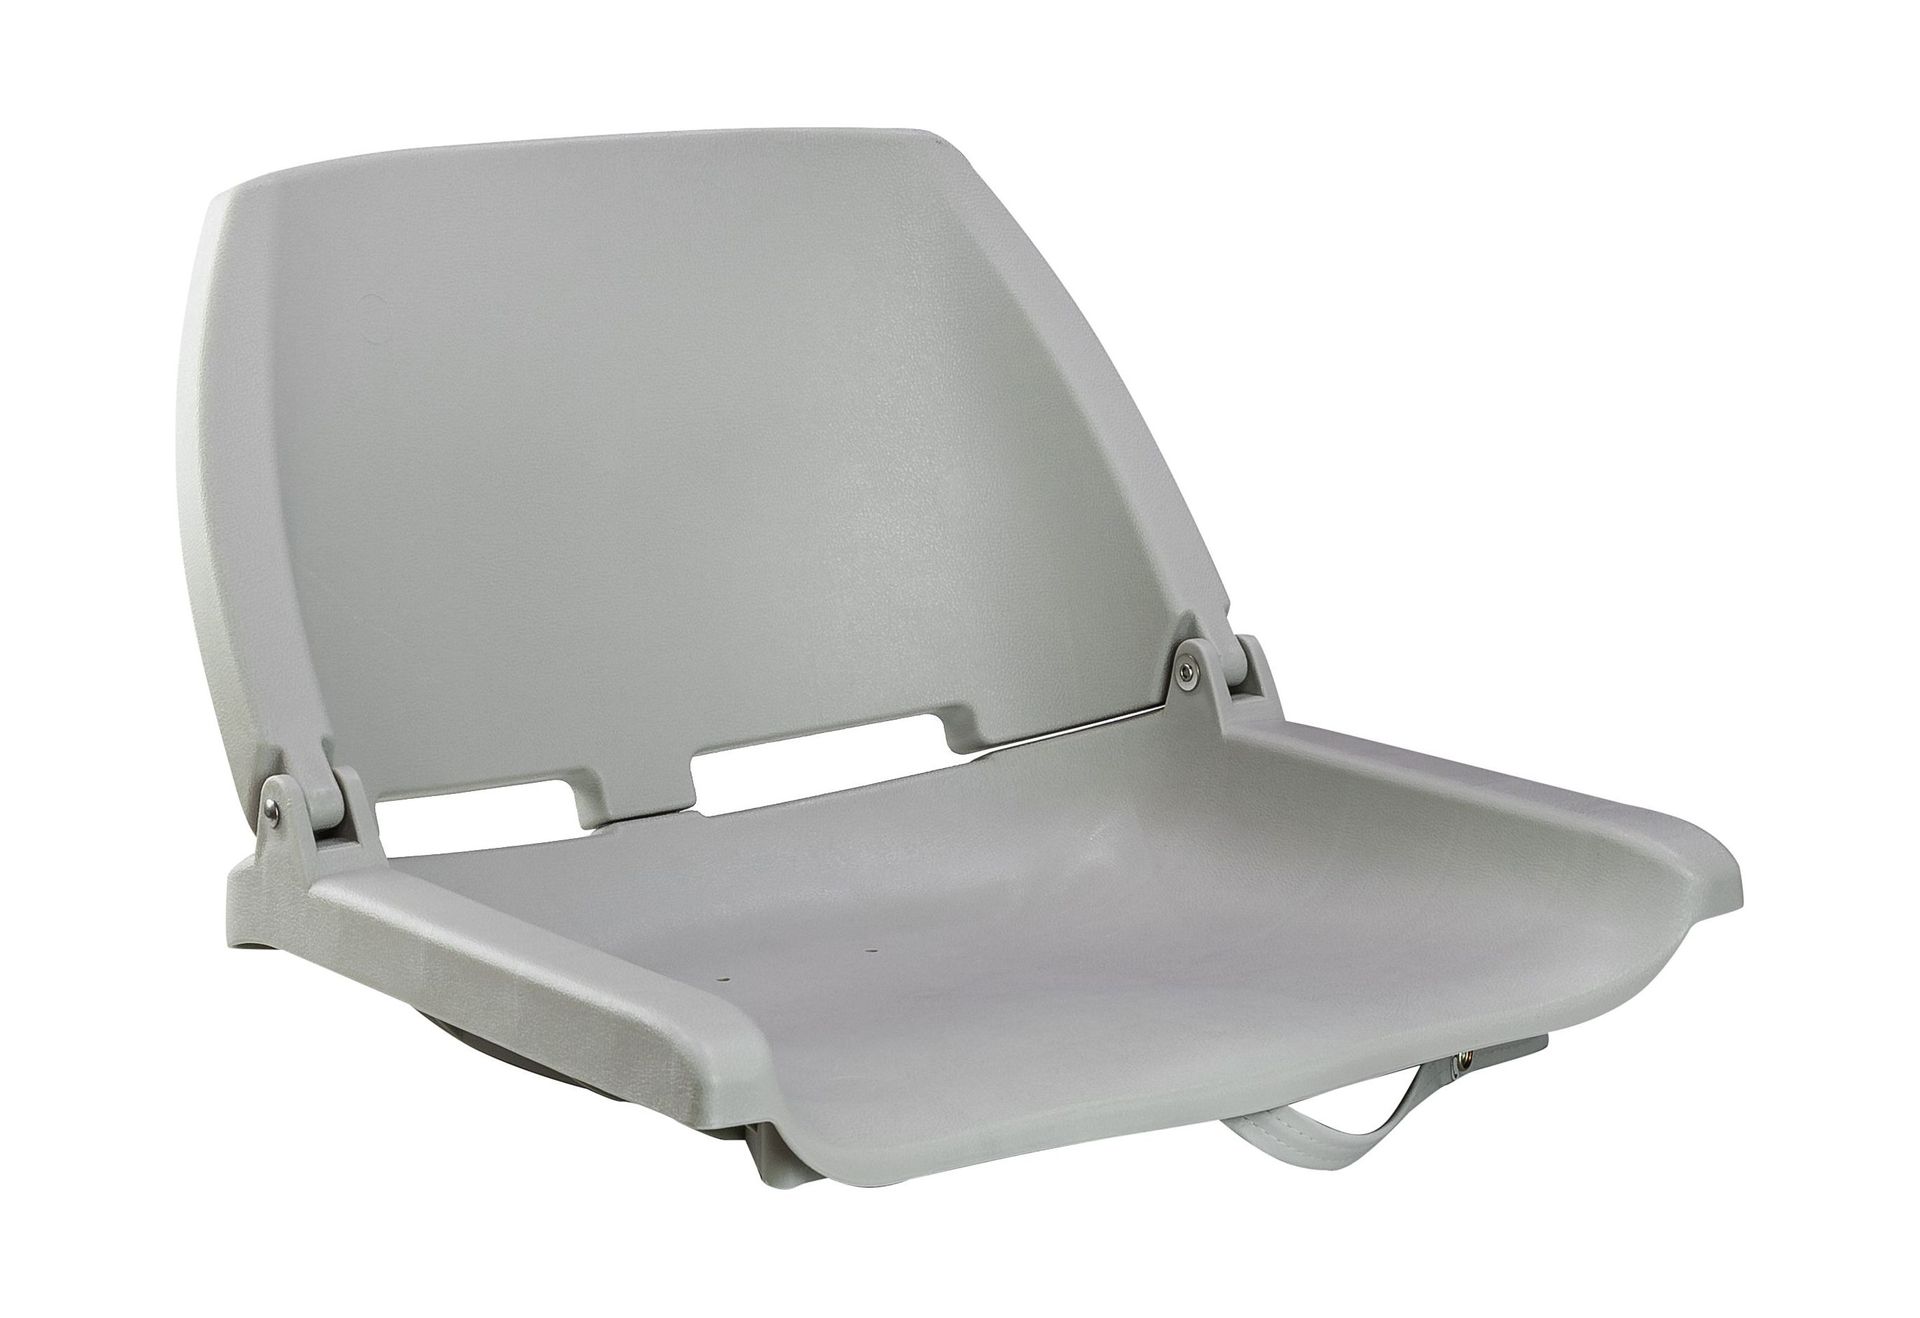 Кресло складное, пластик, цвет серый, Marine Rocket 75110G-MR кресло складное пластик серый marine rocket 75110g mr